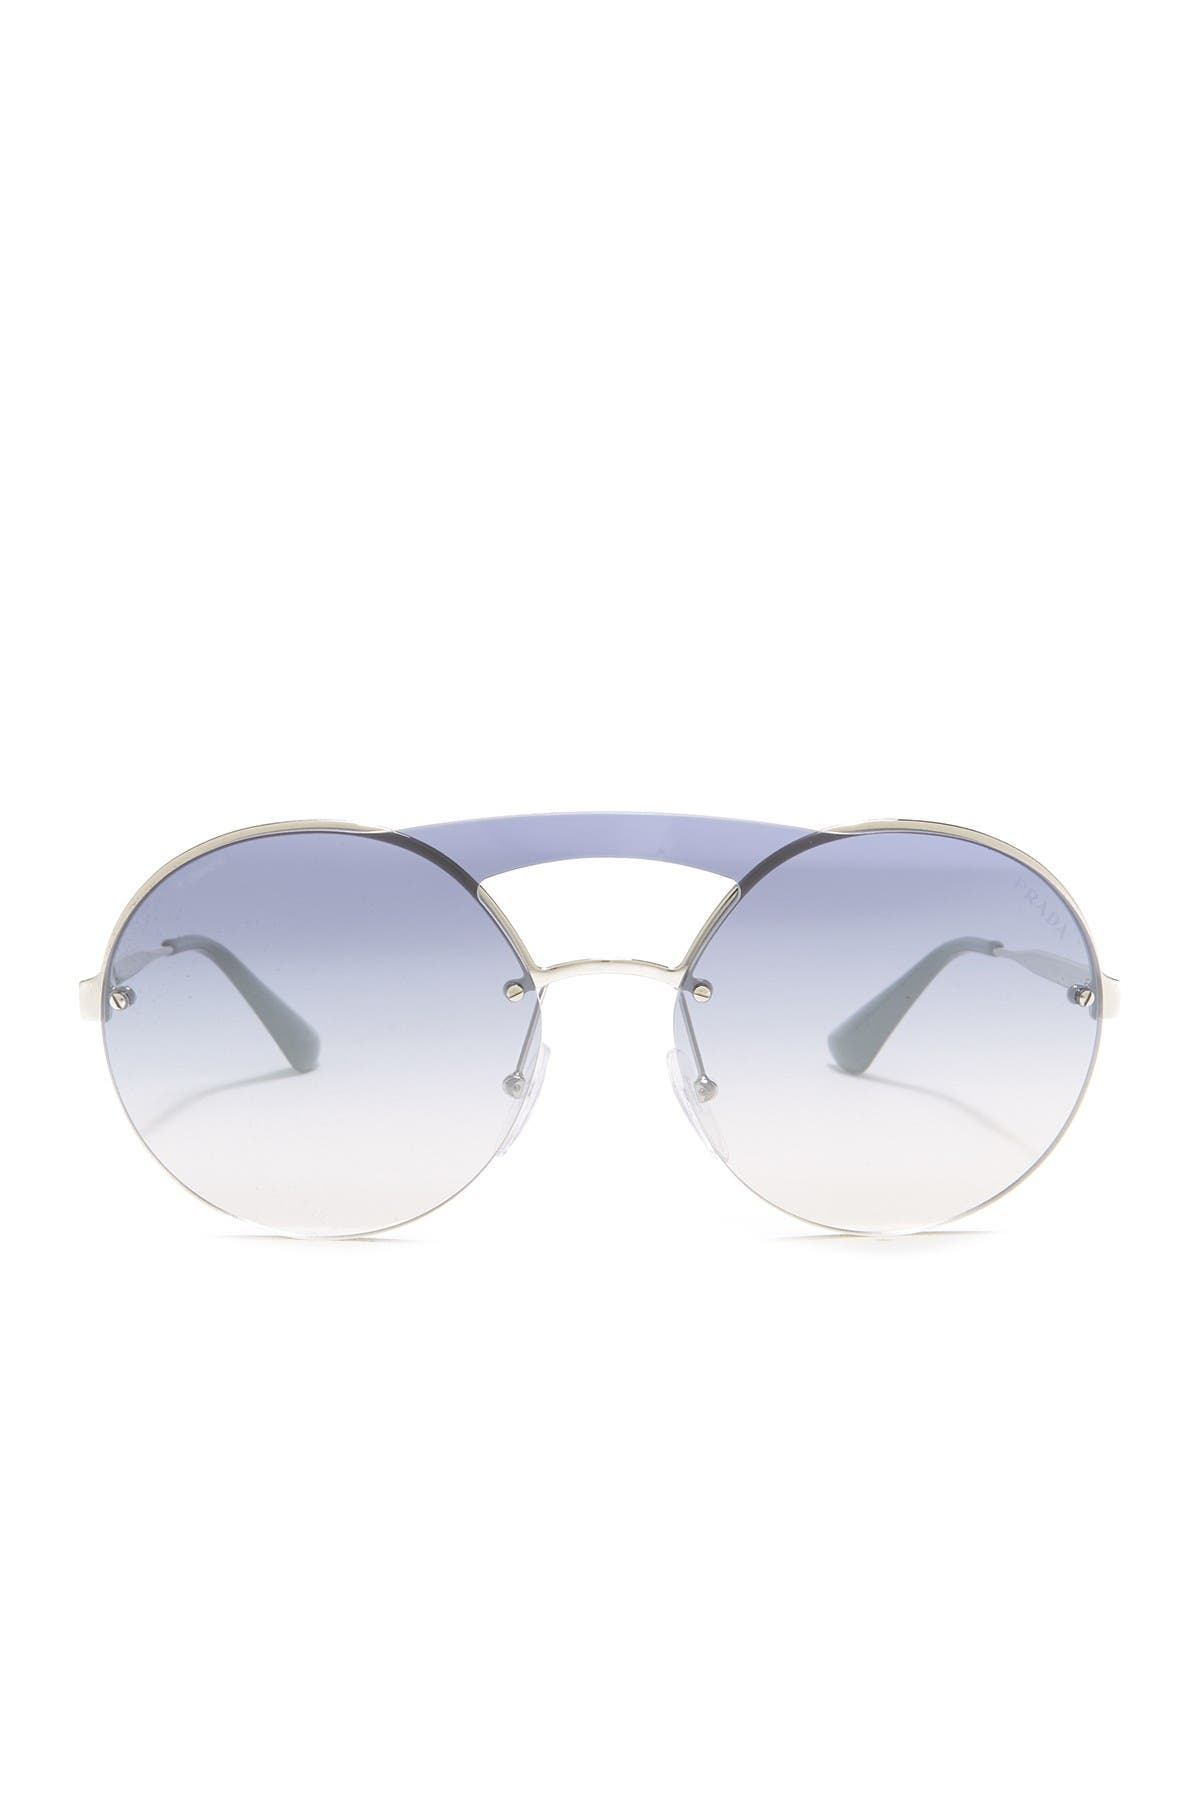 Prada | 36mm Round Sunglasses 